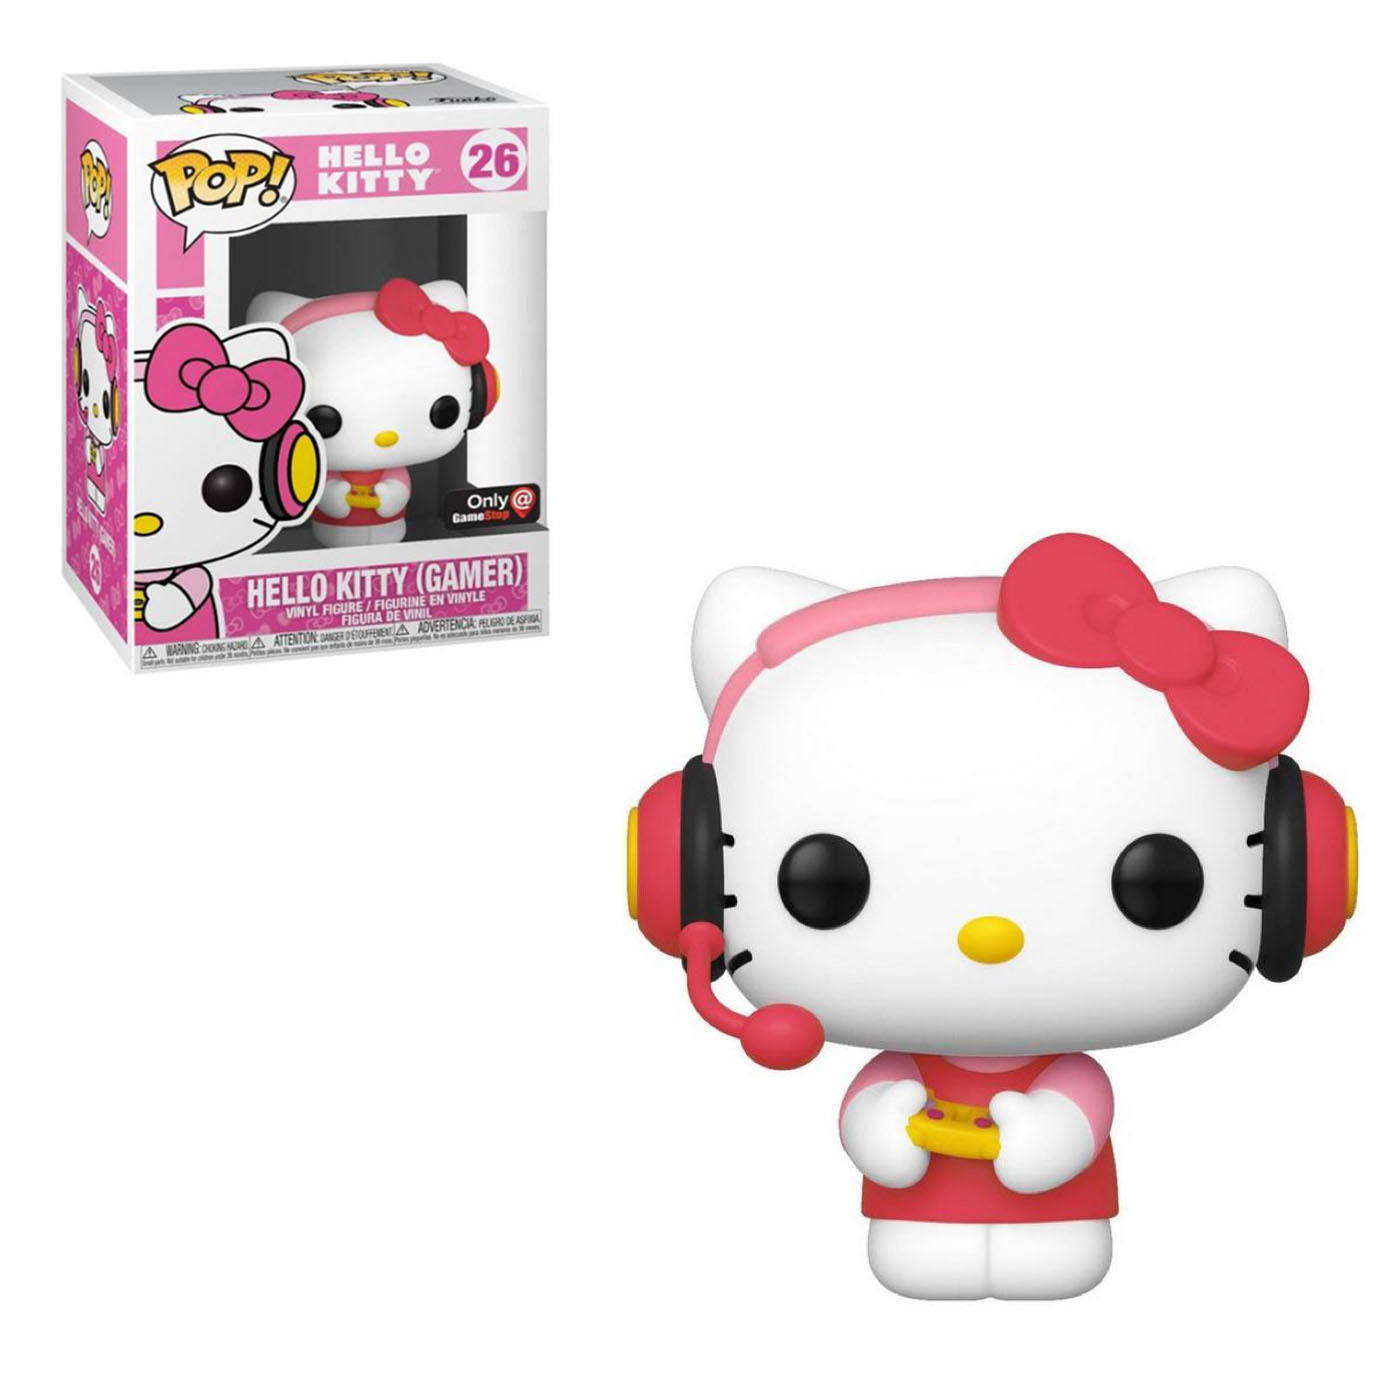 FU41050 Funko Pop! Hello Kitty (Gamer) #26 Game Stop Exclusive